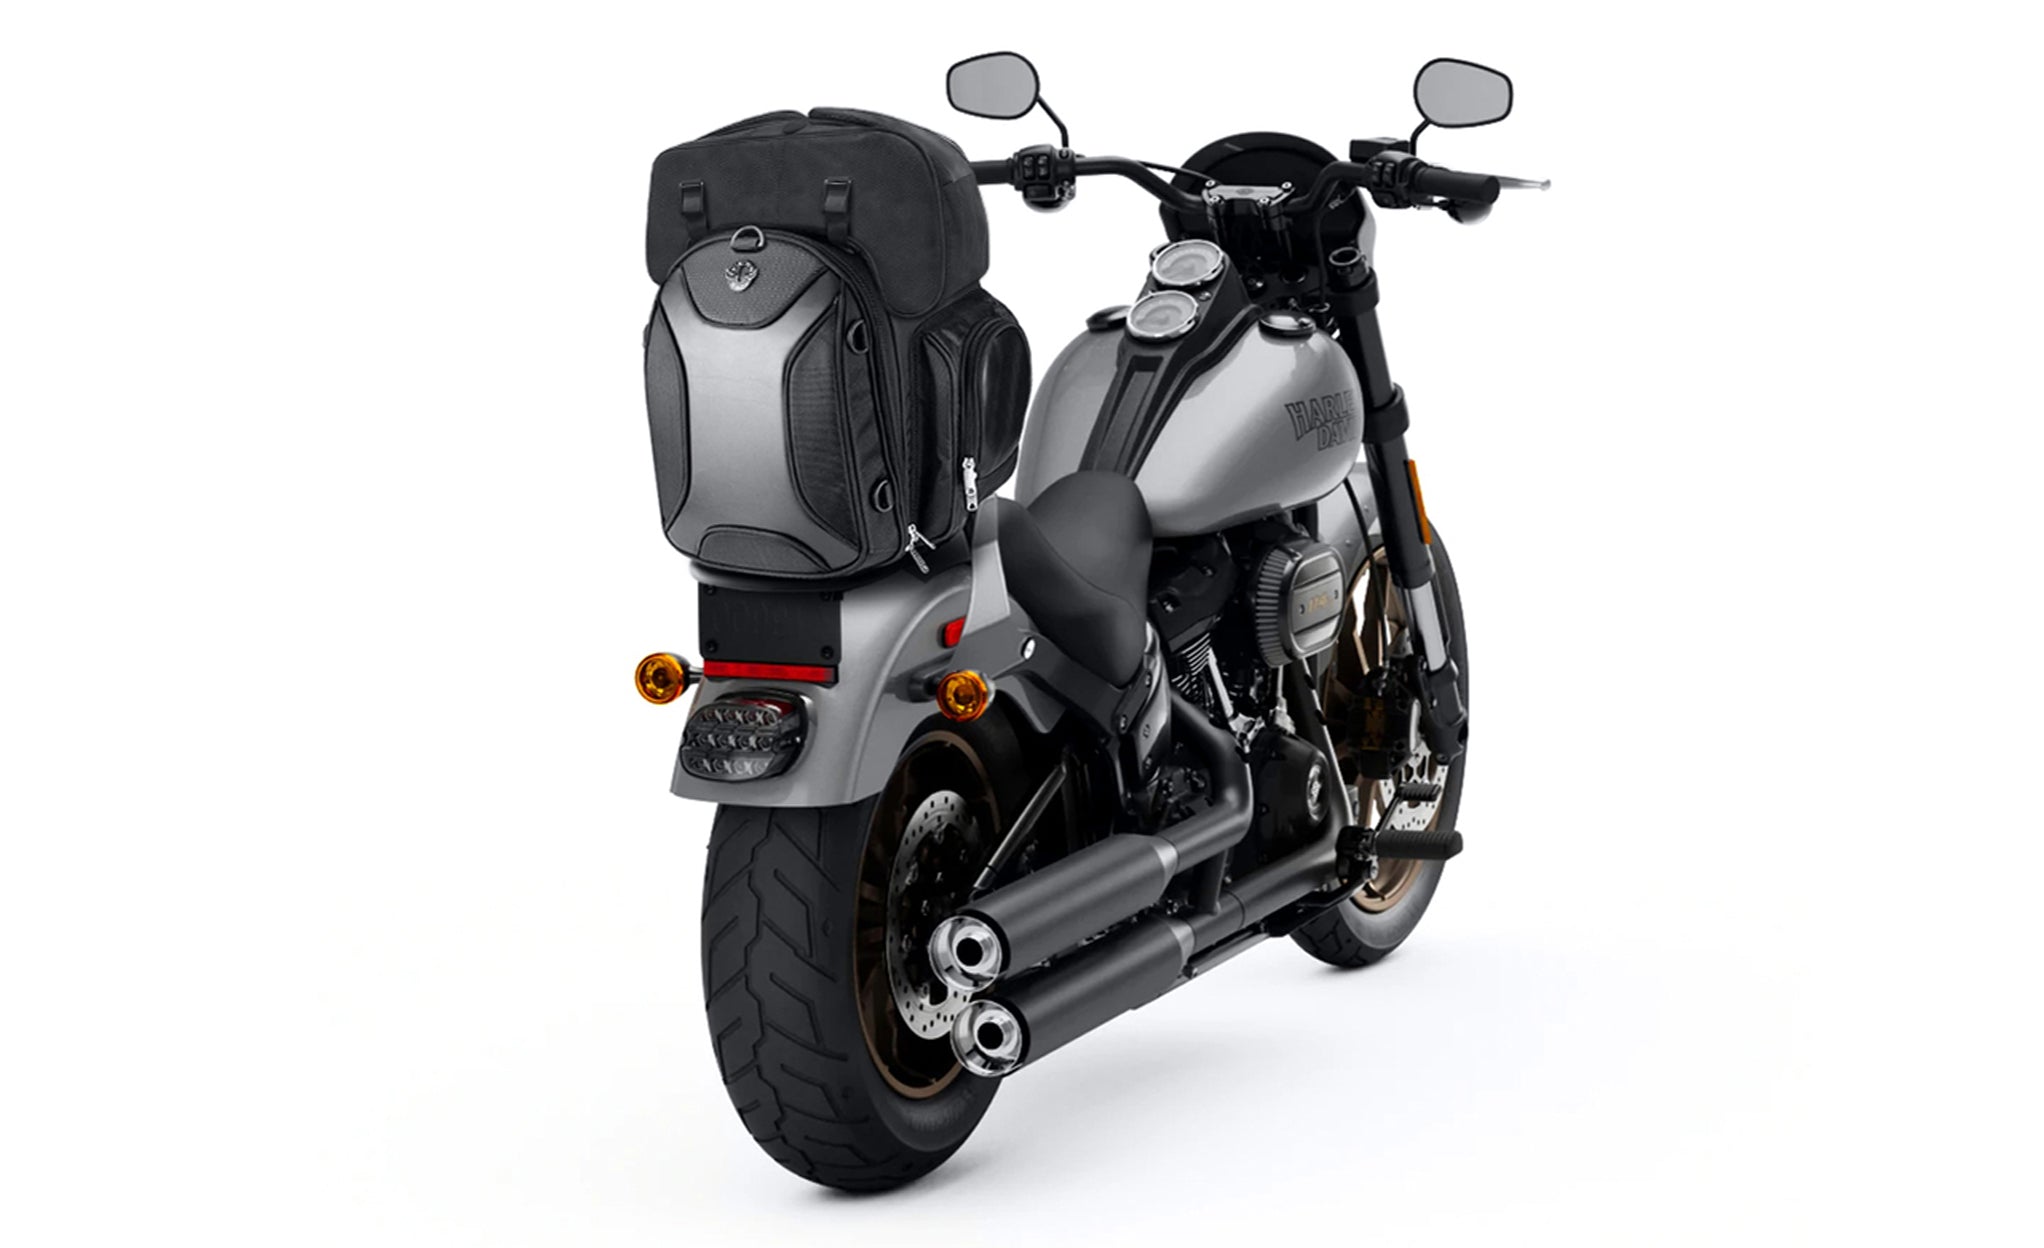 Viking Dagr Extra Large Motorcycle Tail Bag for Harley Davidson Bag on Bike View @expand